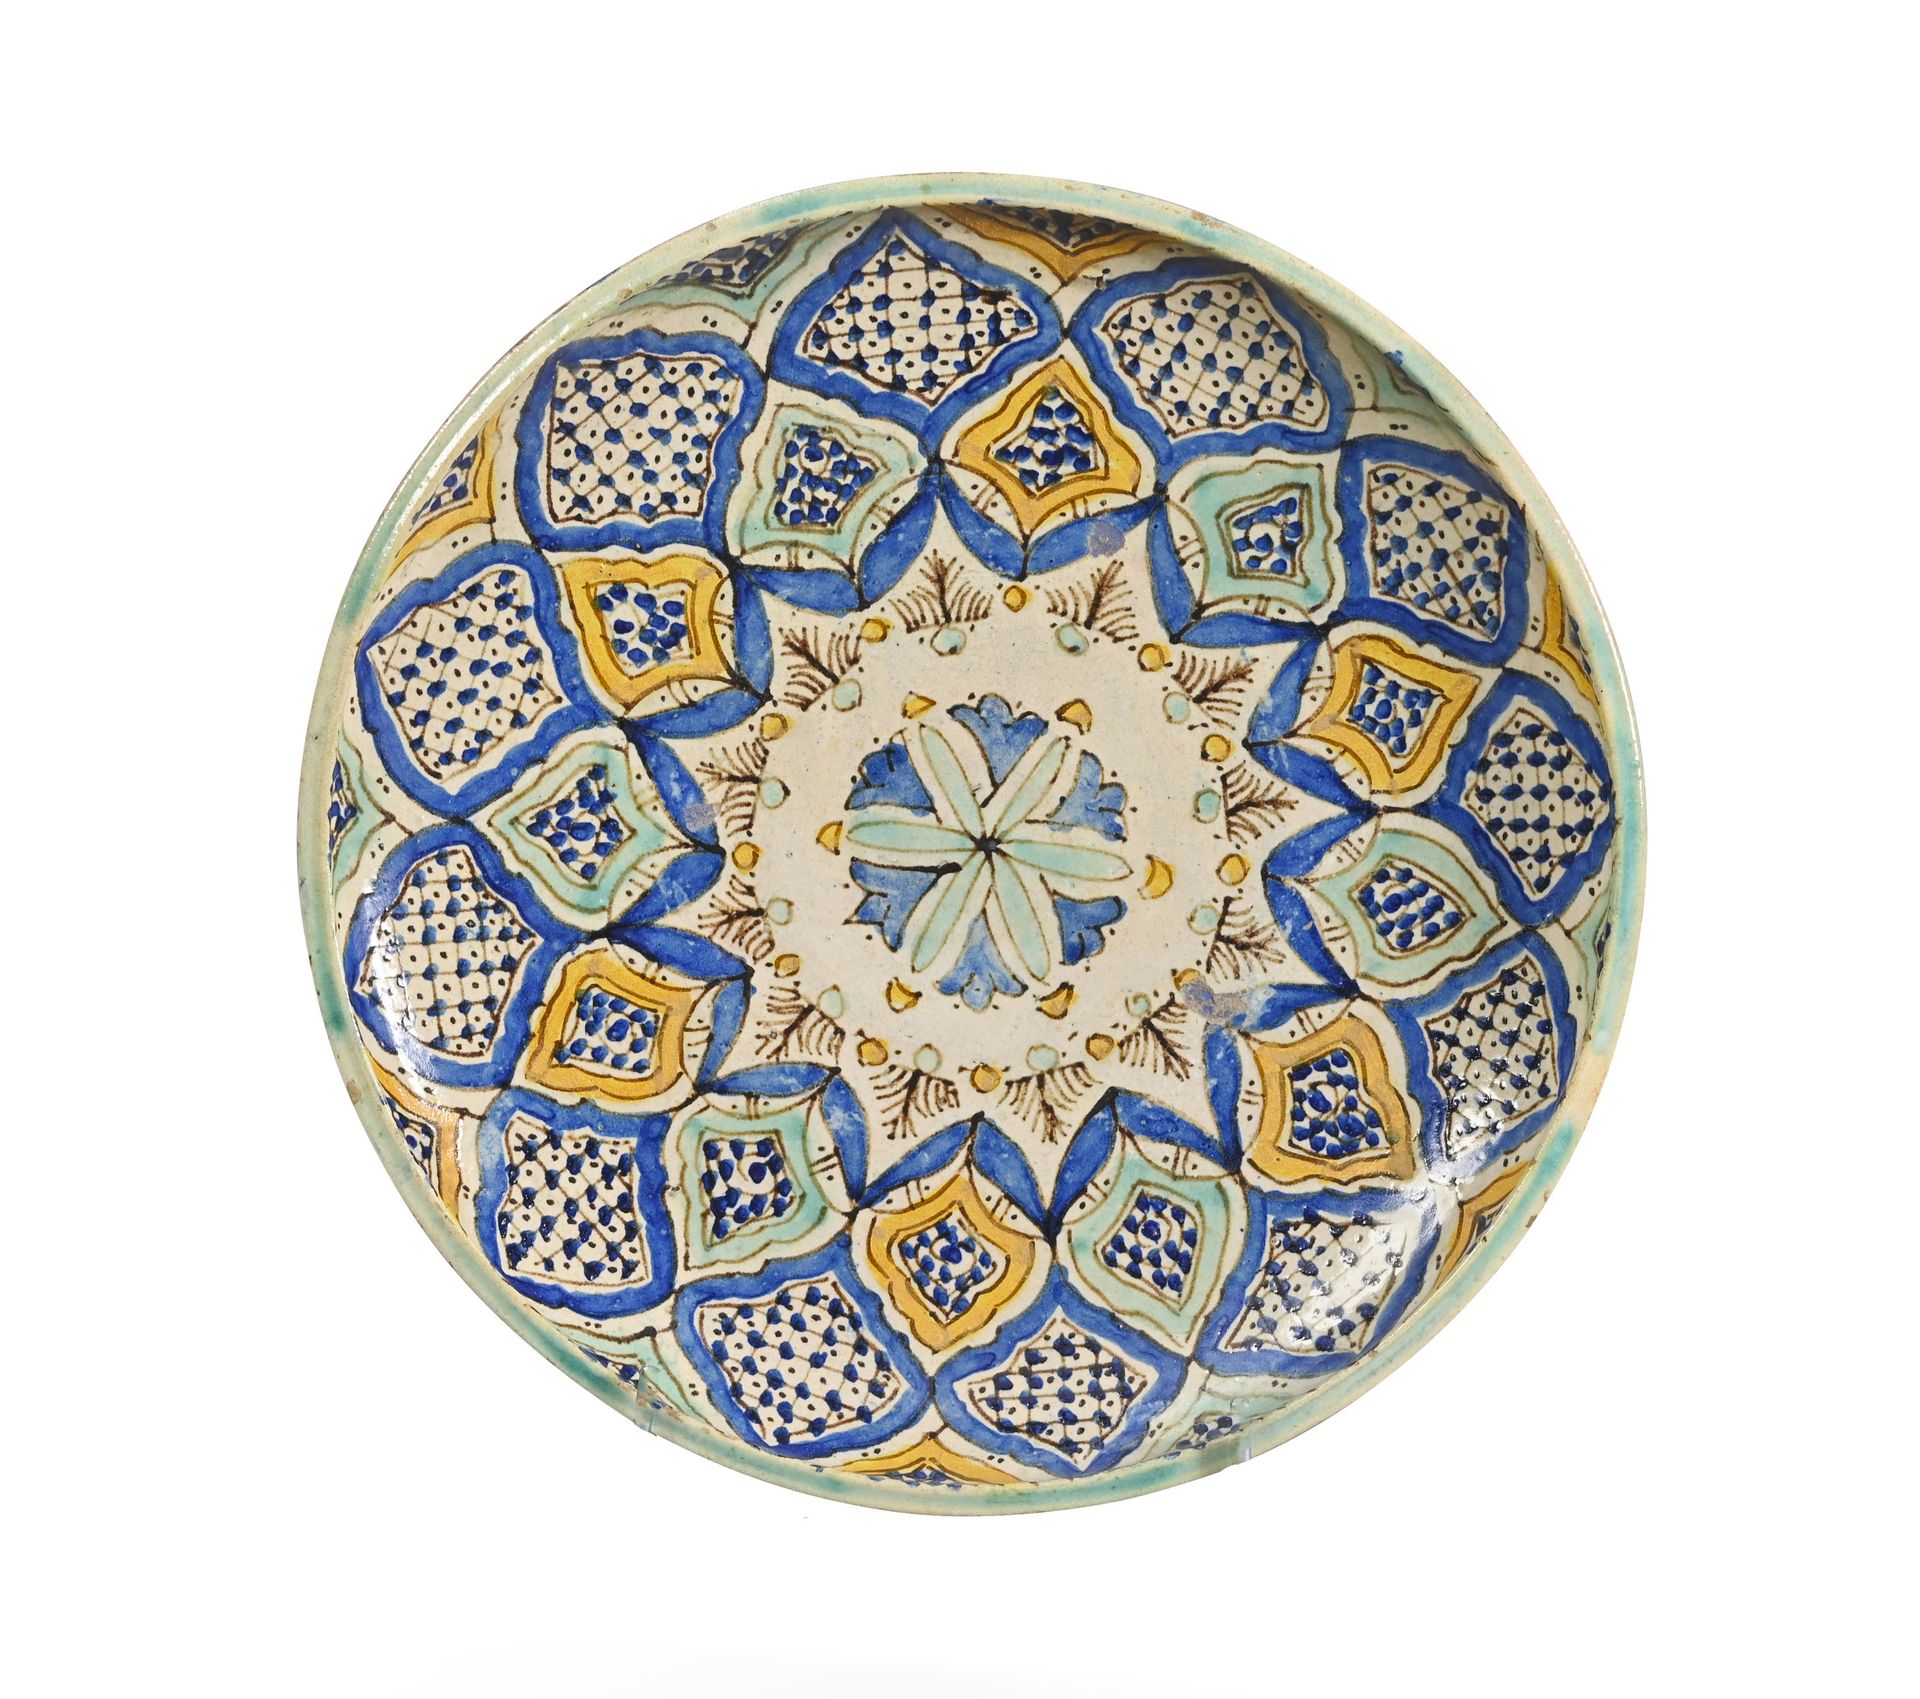 TUNISIE - XIXe / XXe siècle Lote de seis cerámicas tunecinas

Cerámica con decor&hellip;